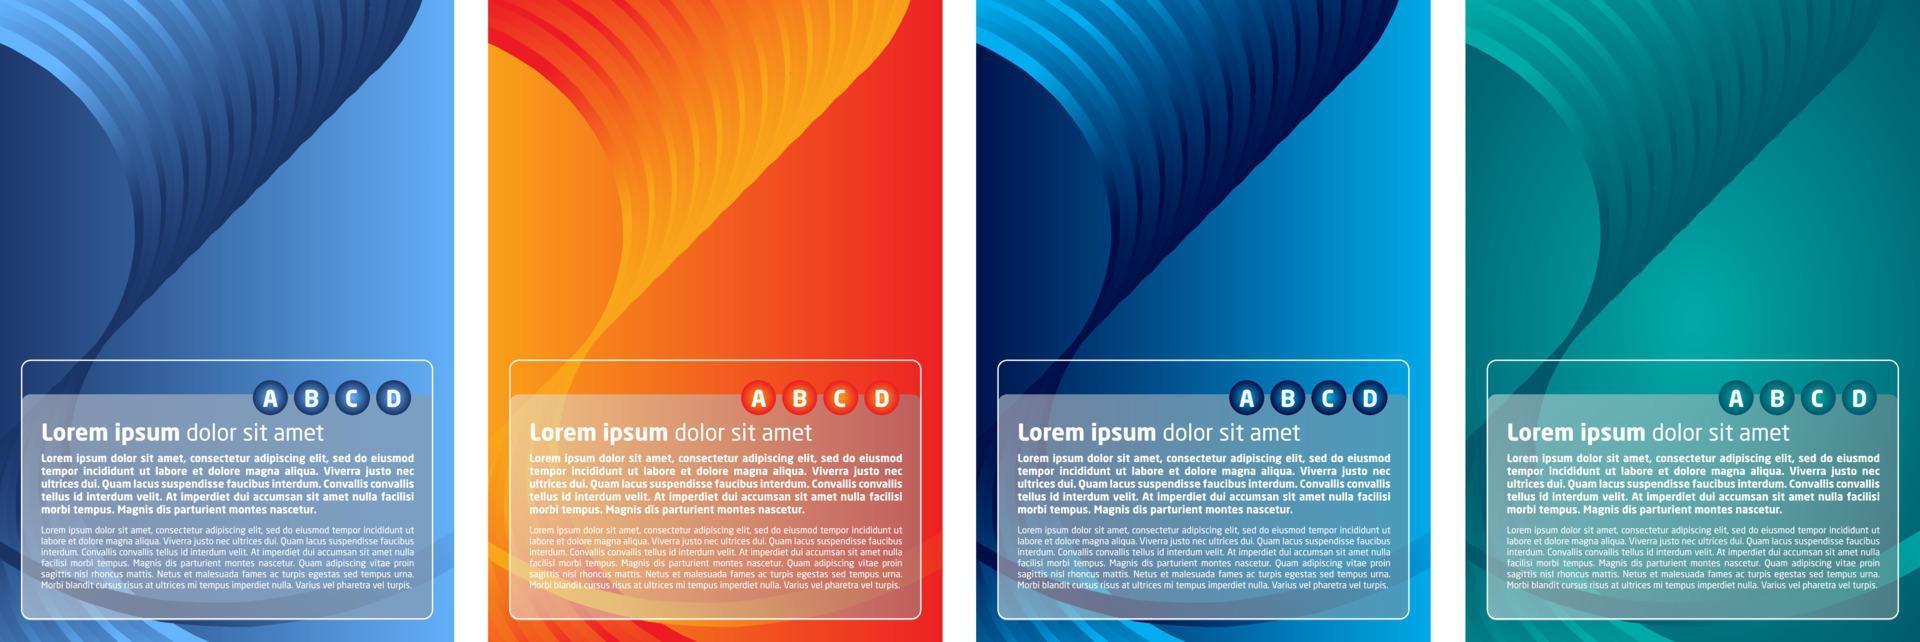 Minimalist covers design. Colorful halftone gradients for Multimedia Purpose vector